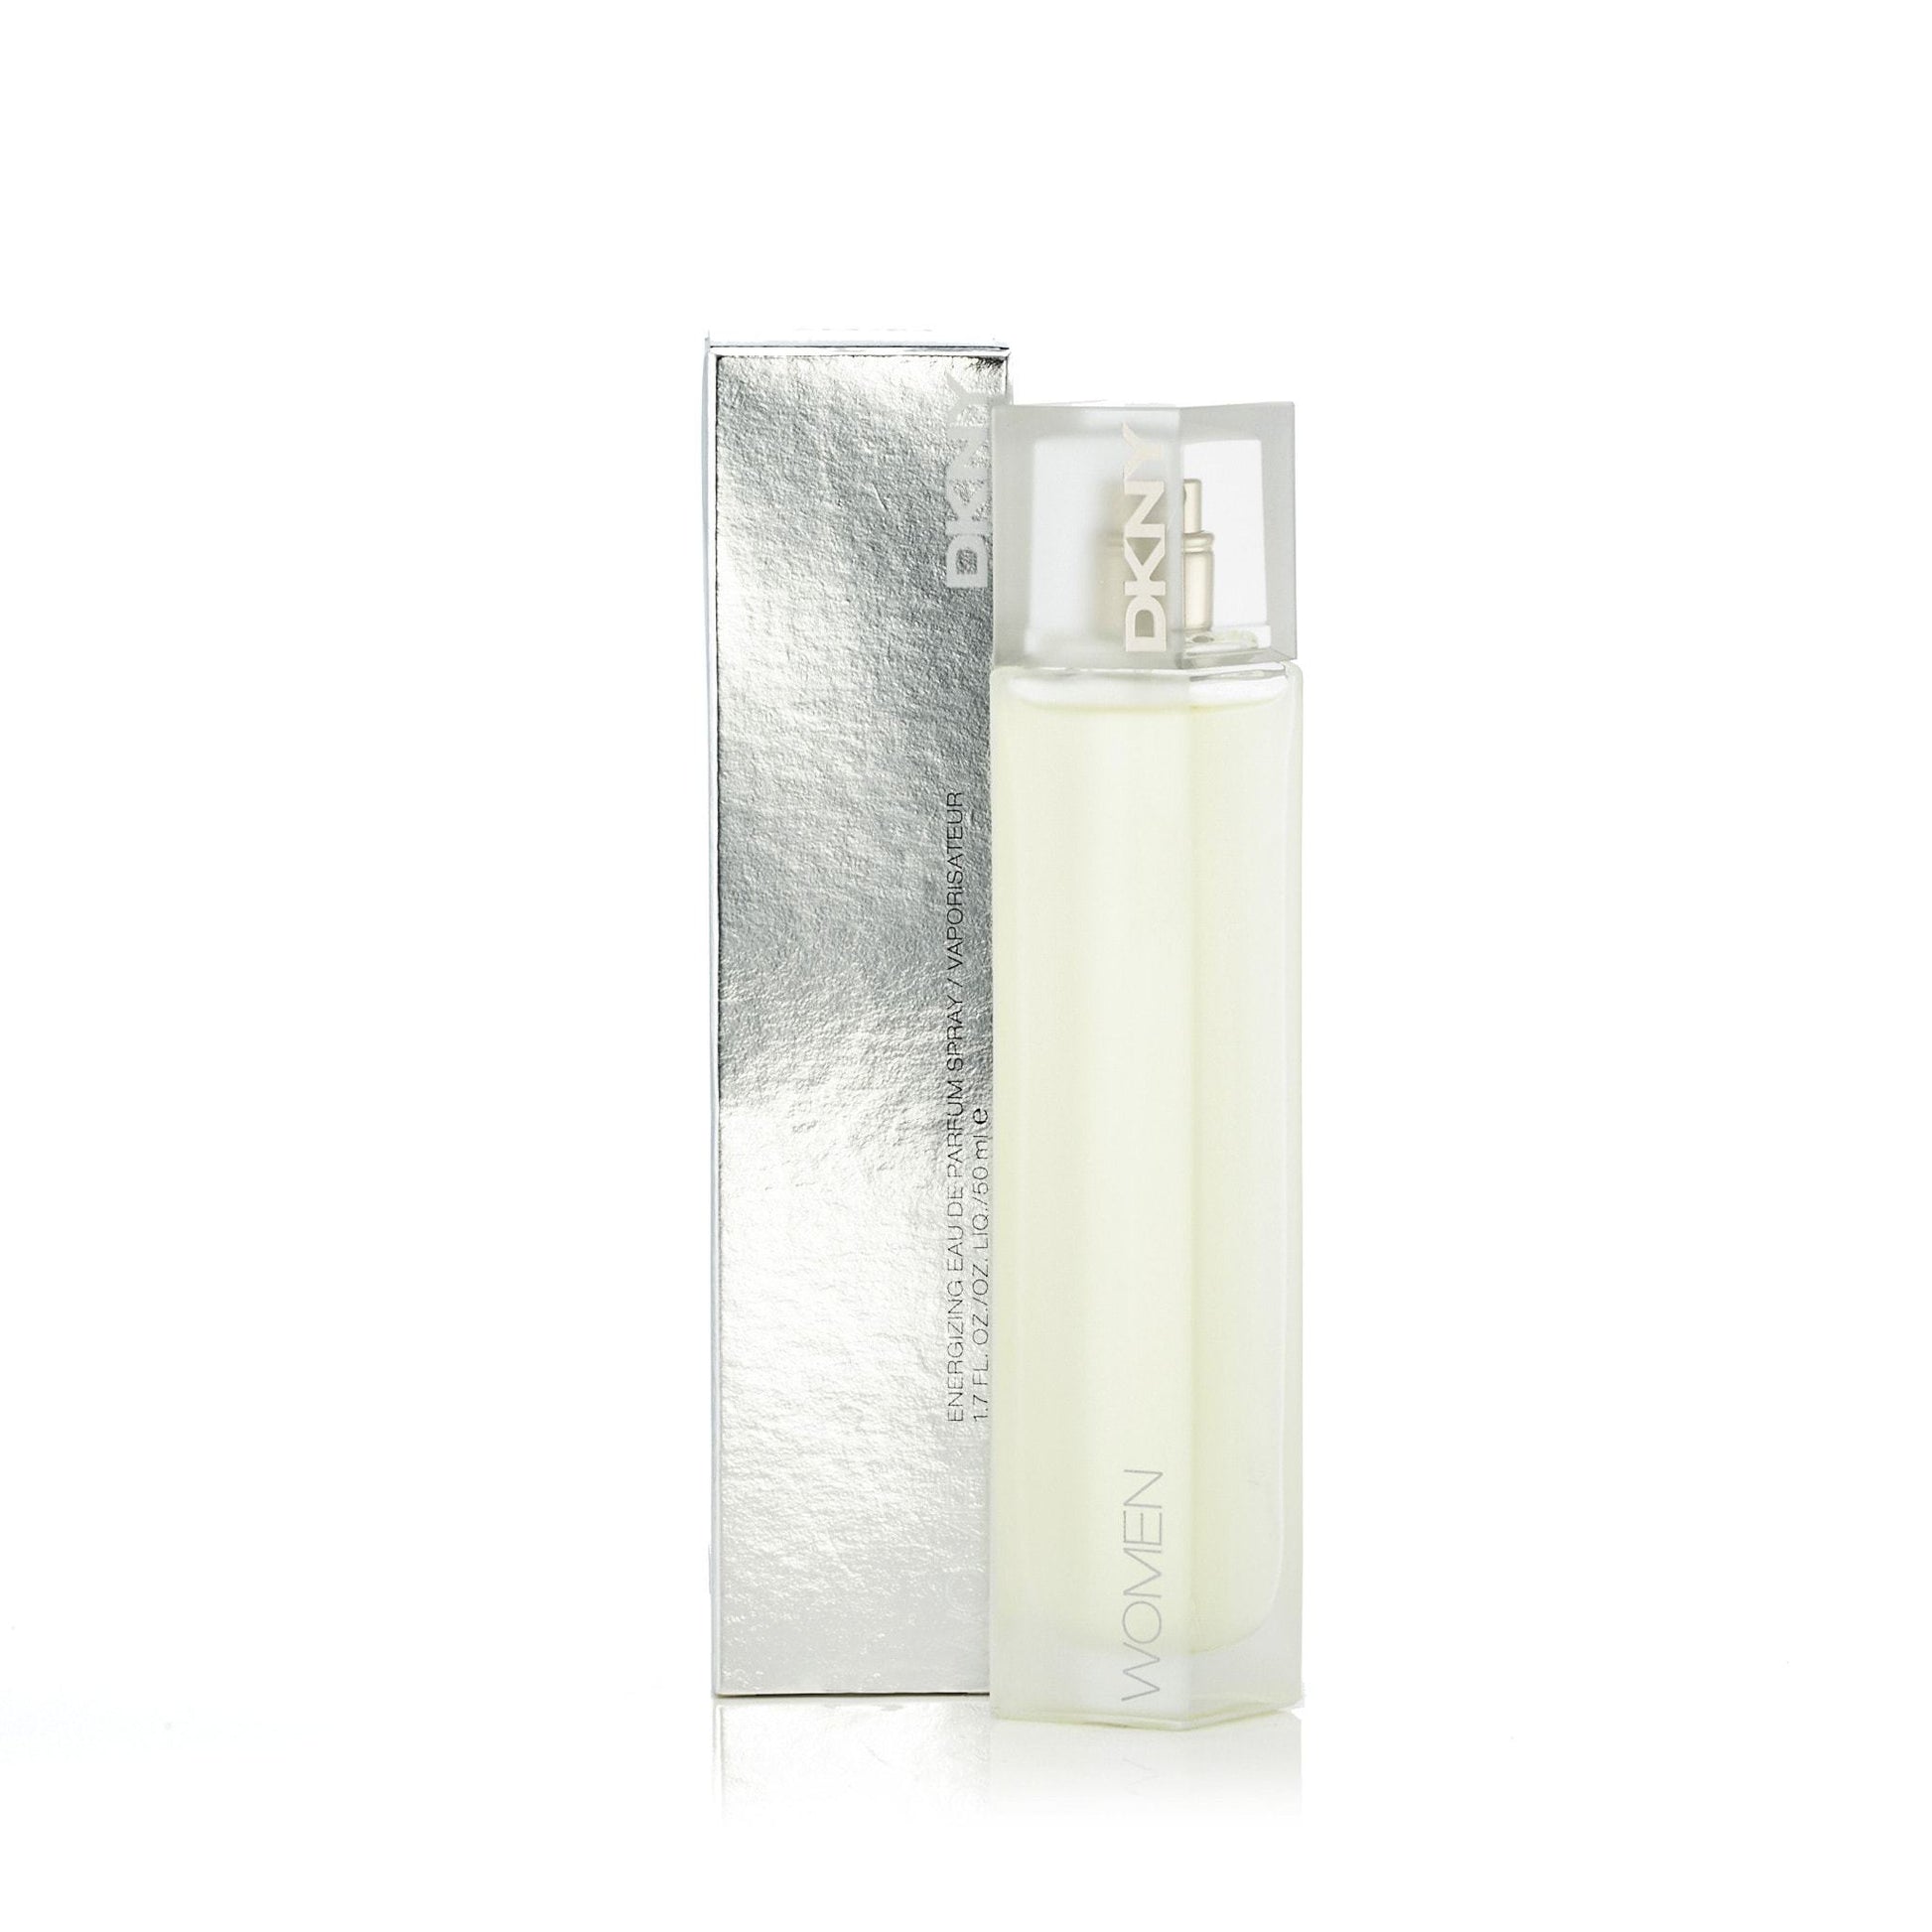 DKNY Women Eau de Parfum Spray for Women by Donna Karan, Product image 1